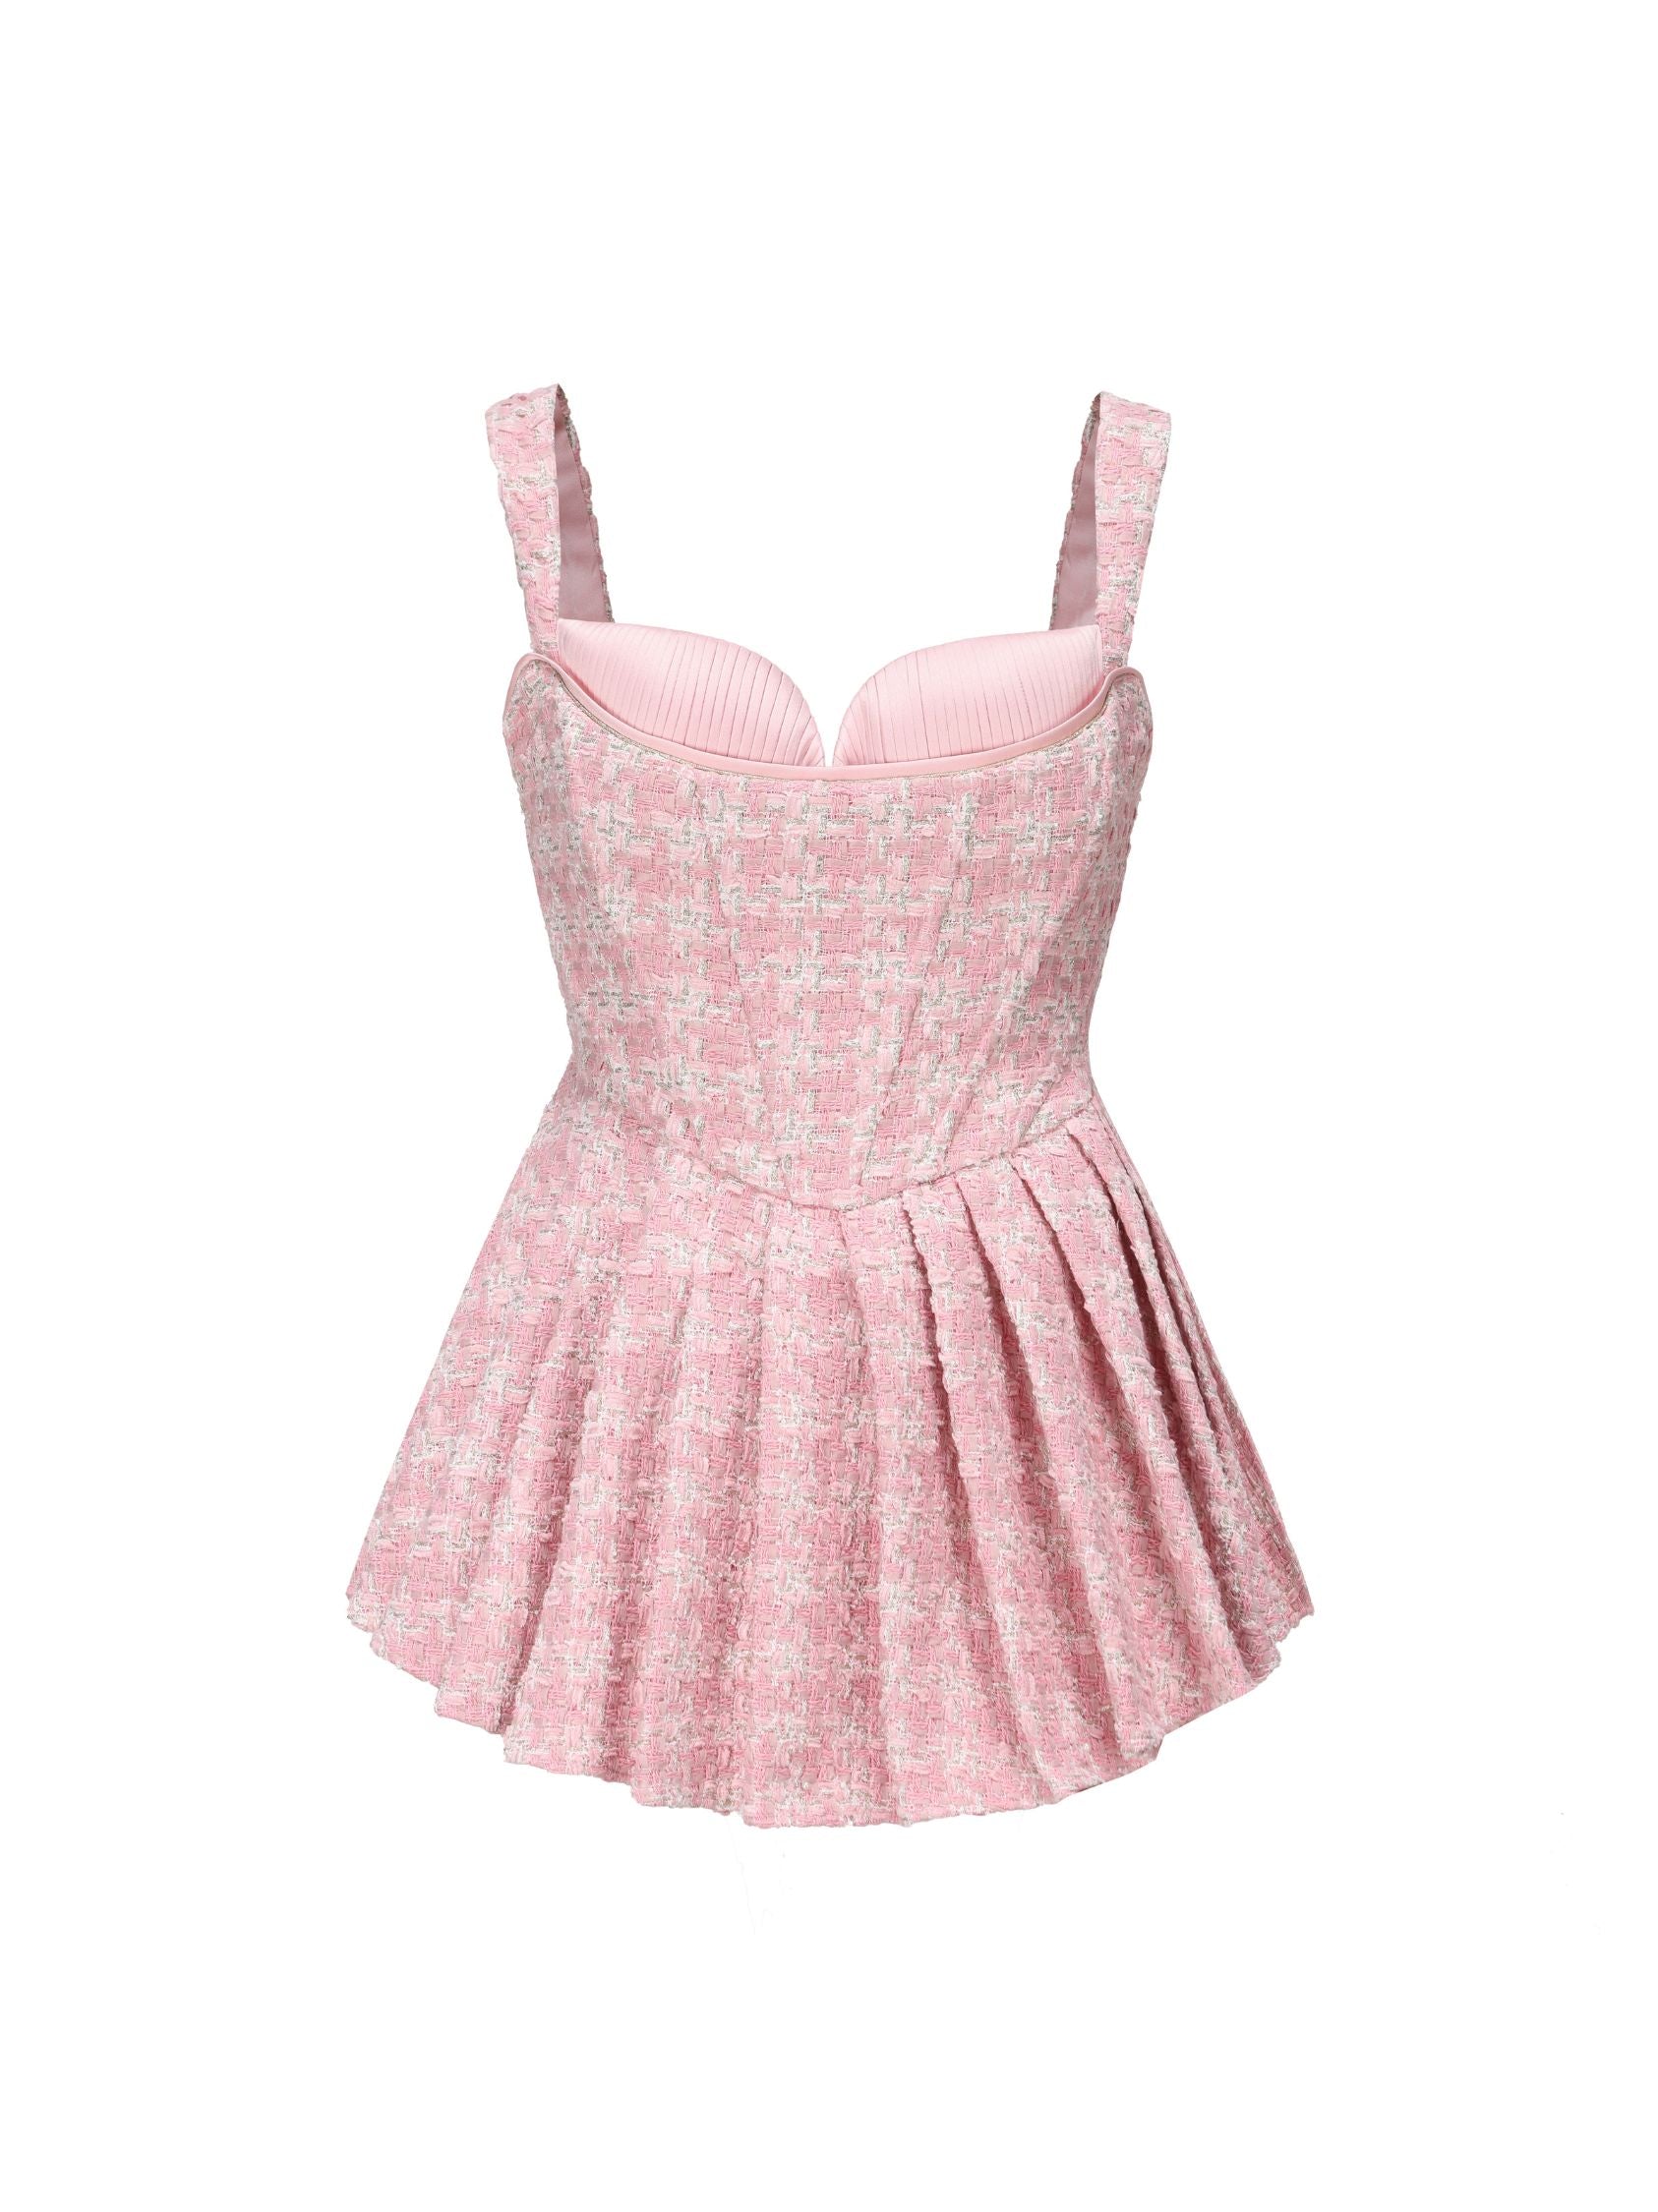 Chelsea Tweed Dress (Pink) – Nana Jacqueline | Jerseykleider